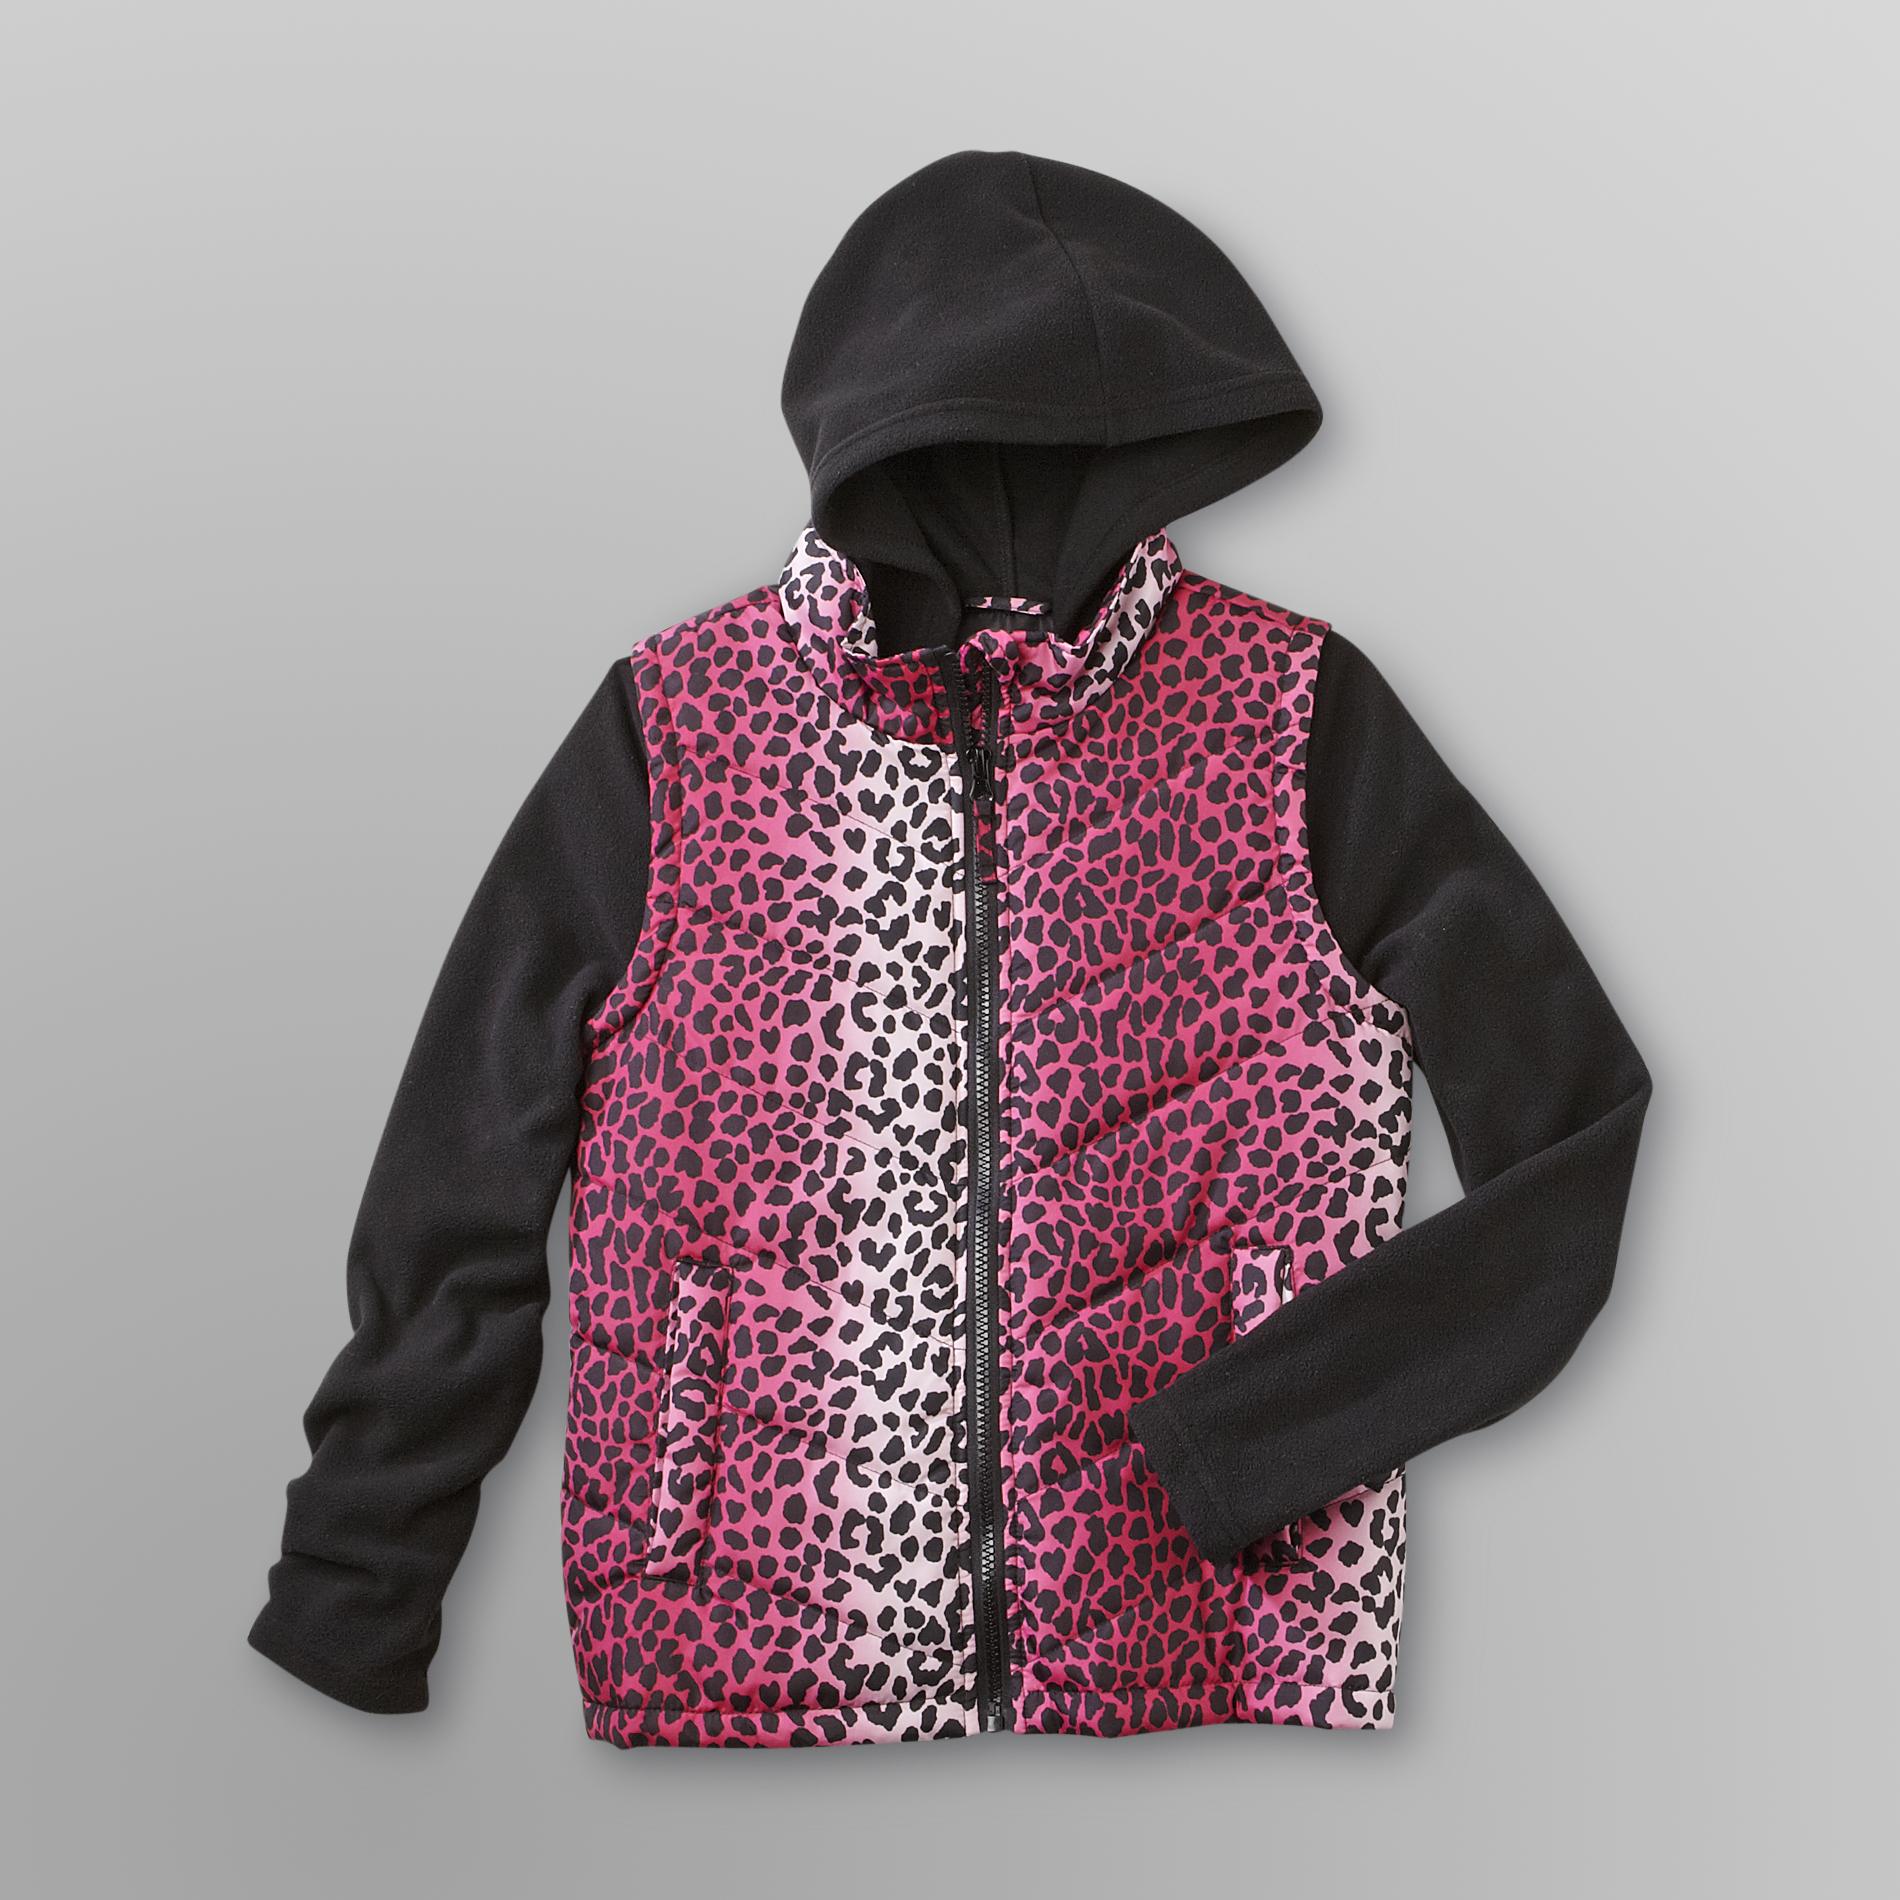 Athletech Girl's Hooded Jacket - Leopard Print